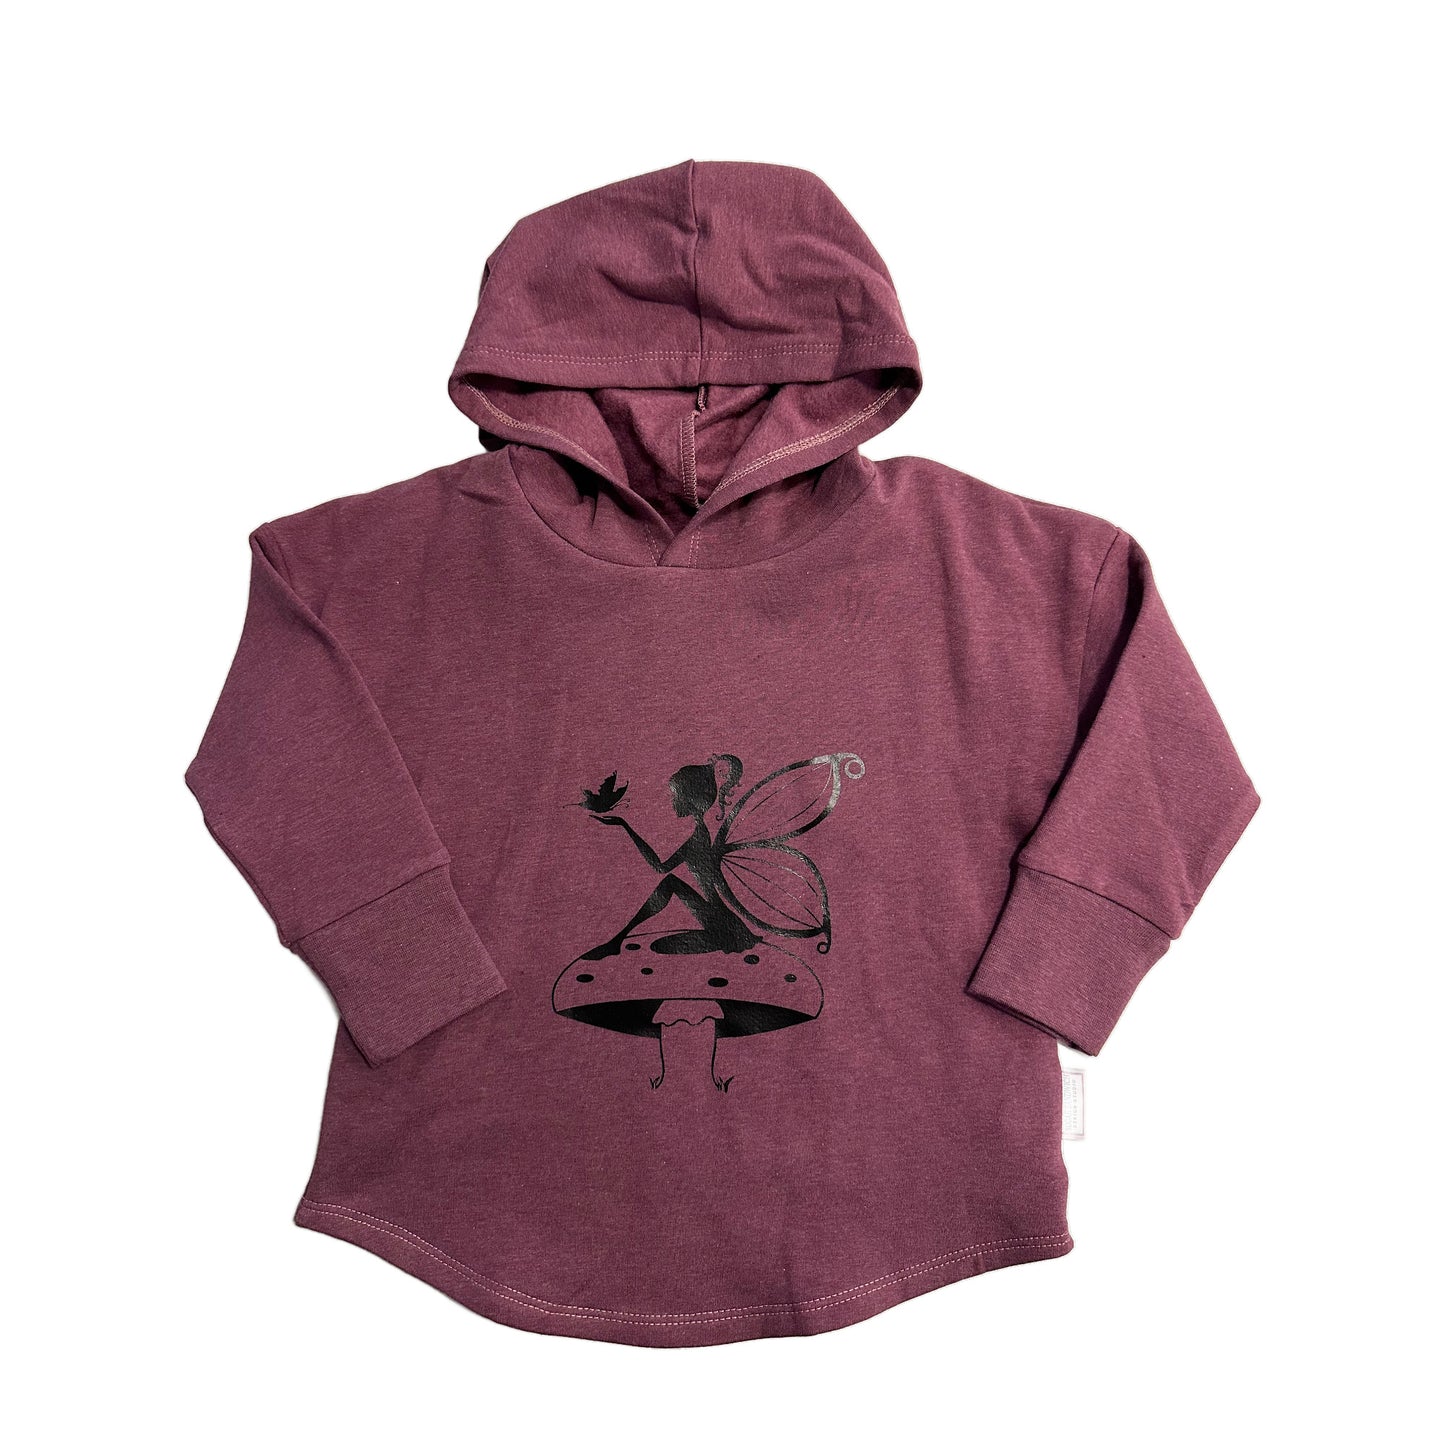 Fairy Graphic Design on Quartz Purple Hooded T-shirt